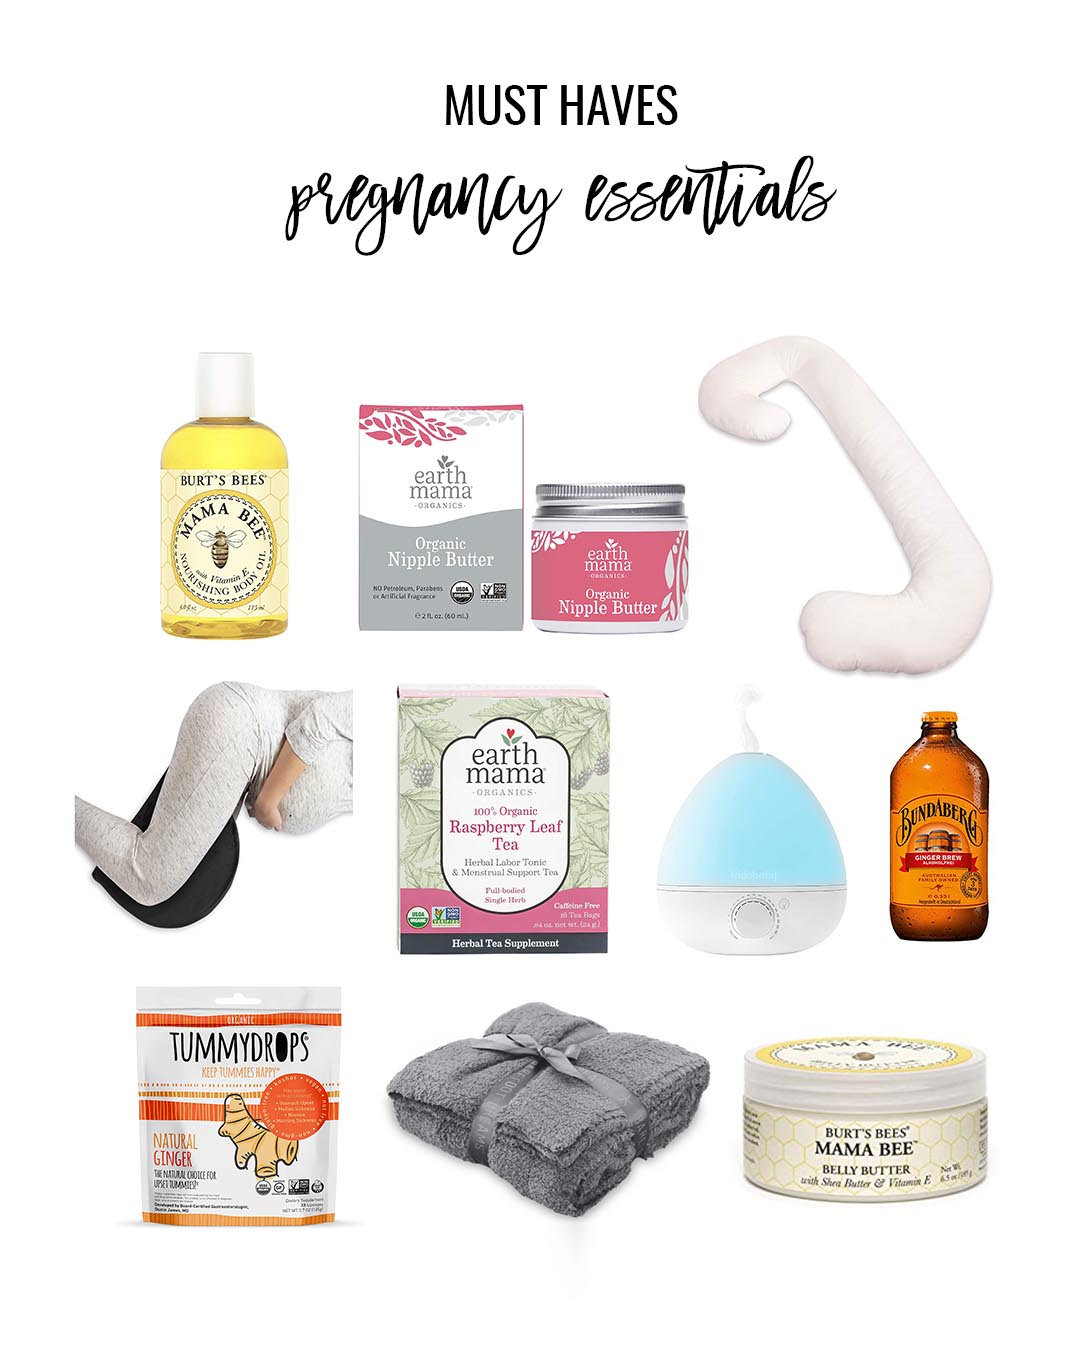 https://blog.brittanybekas.com/wp-content/uploads/2021/01/pregnancy-essentials-1.jpg